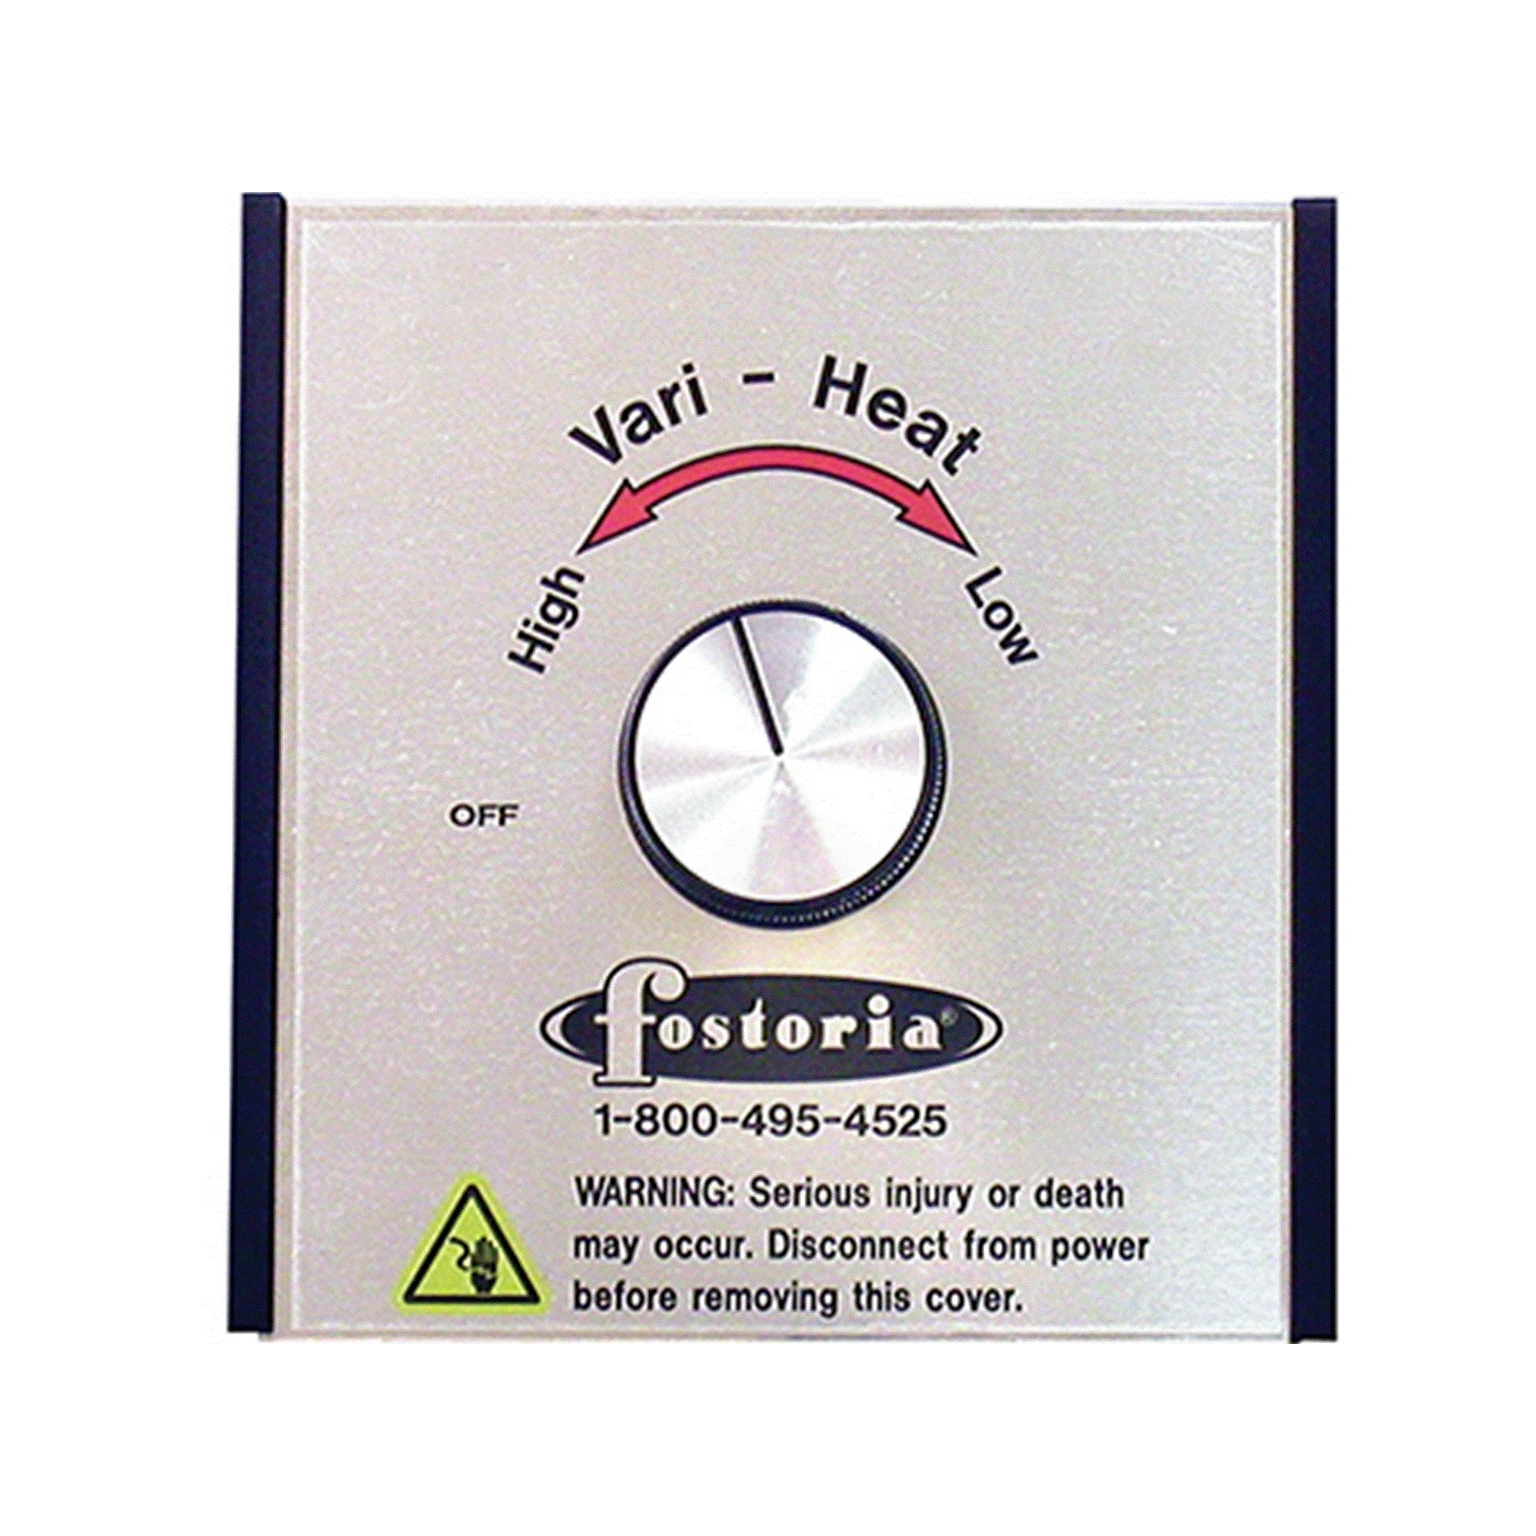 TPI Corporation Fostoria VHC-15 Variable Heat Controller, Multicolor (04459402)